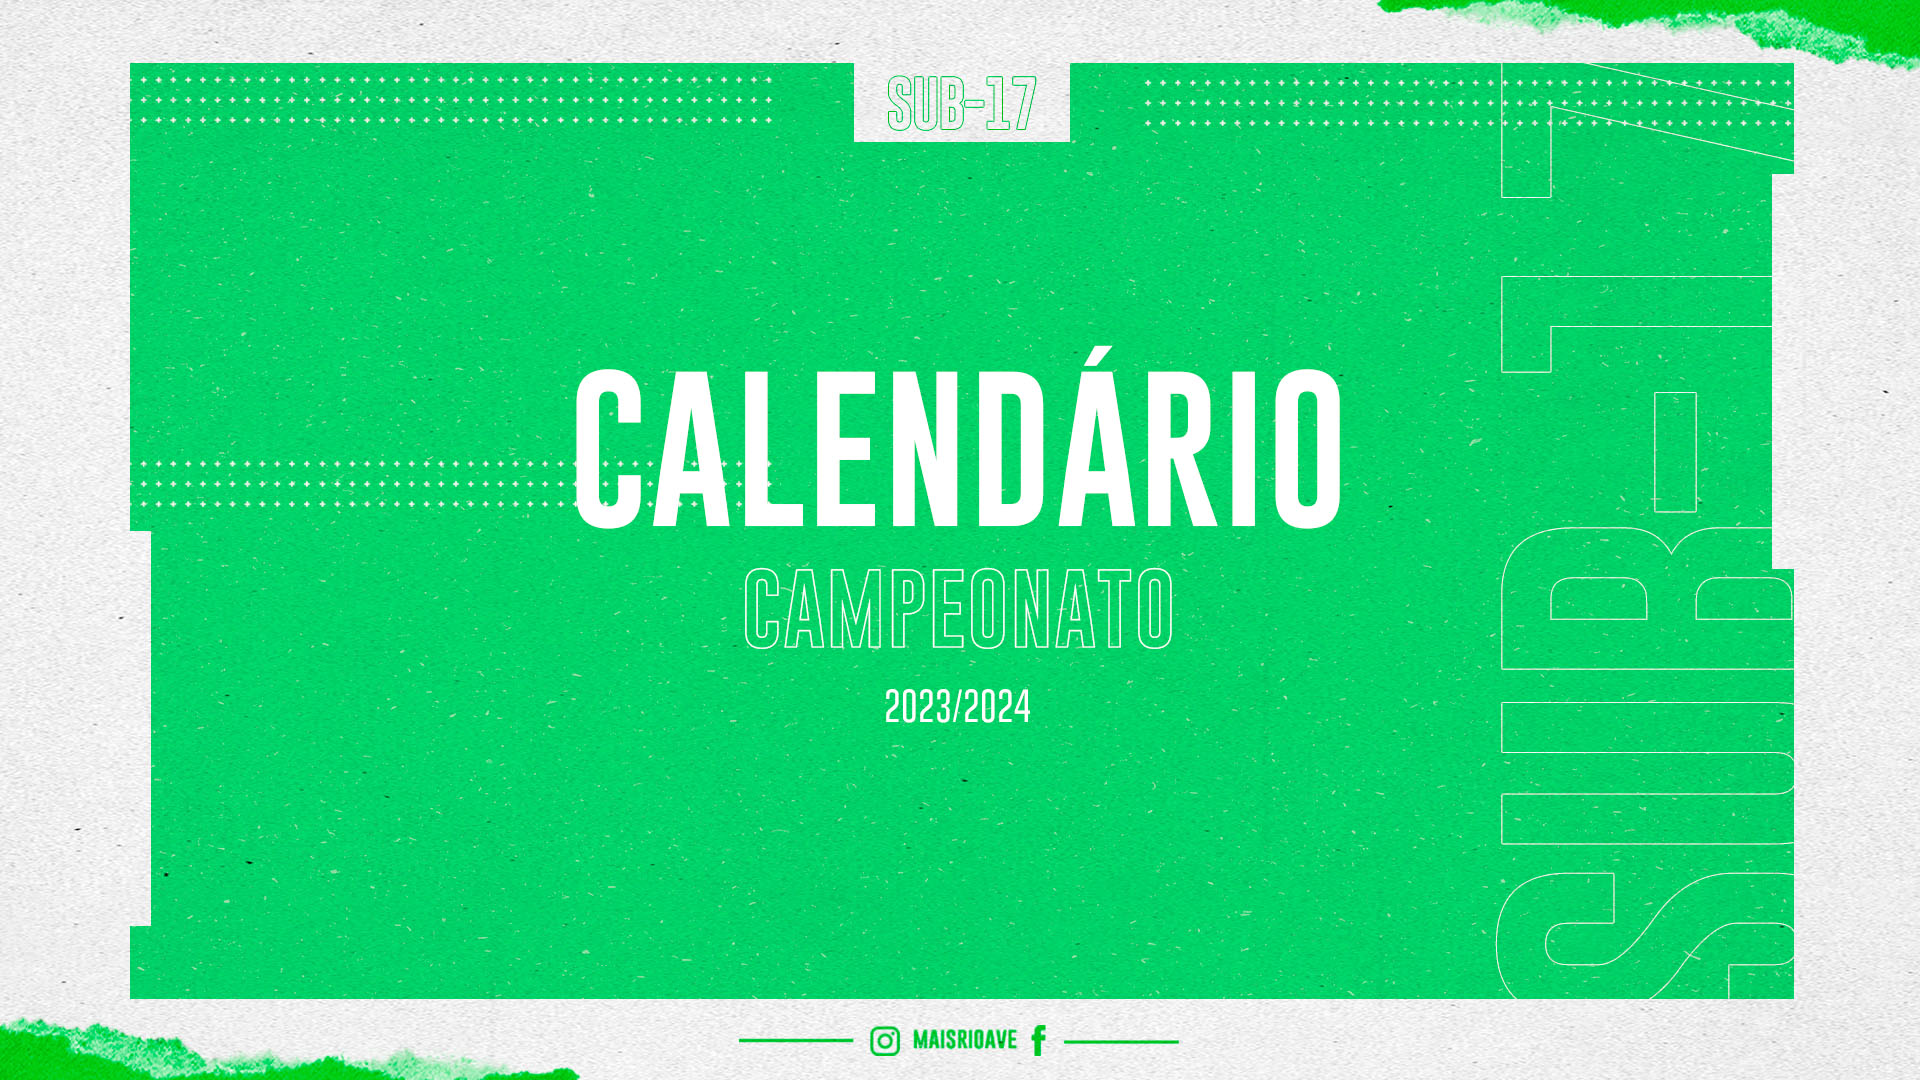 Pré-época 23/24 calendarizada - Rio Ave Futebol Clube